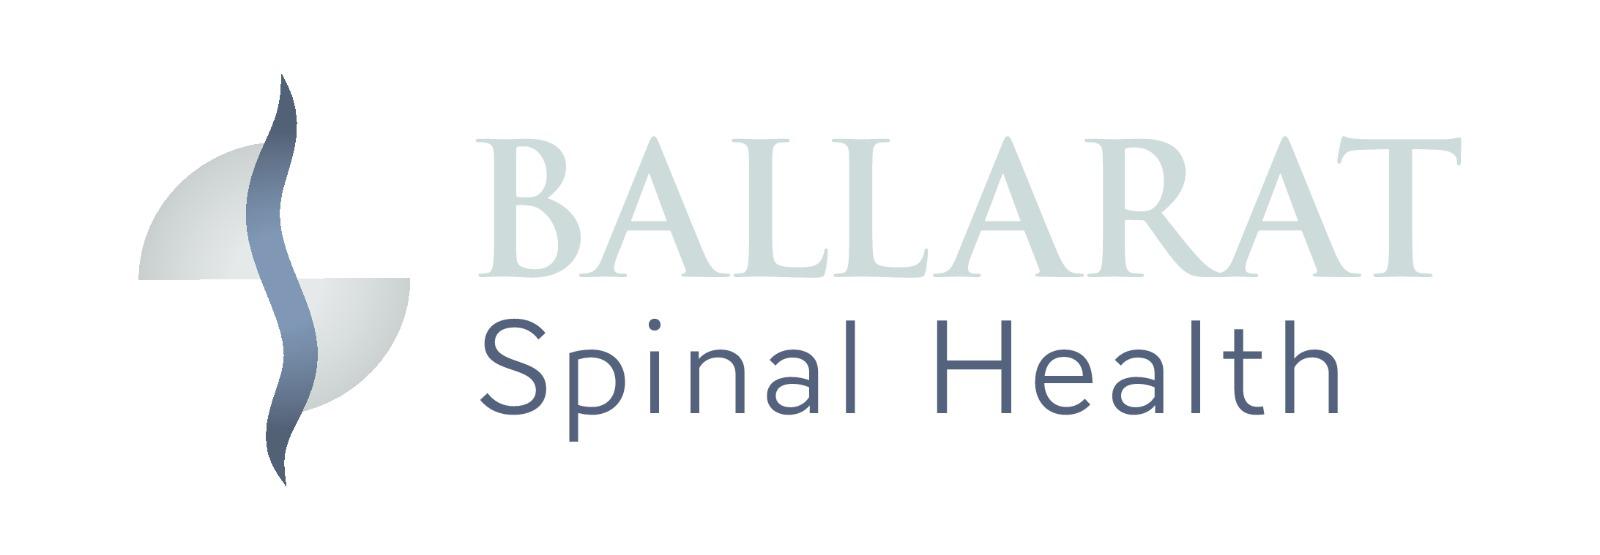 Ballarat Spinal Health